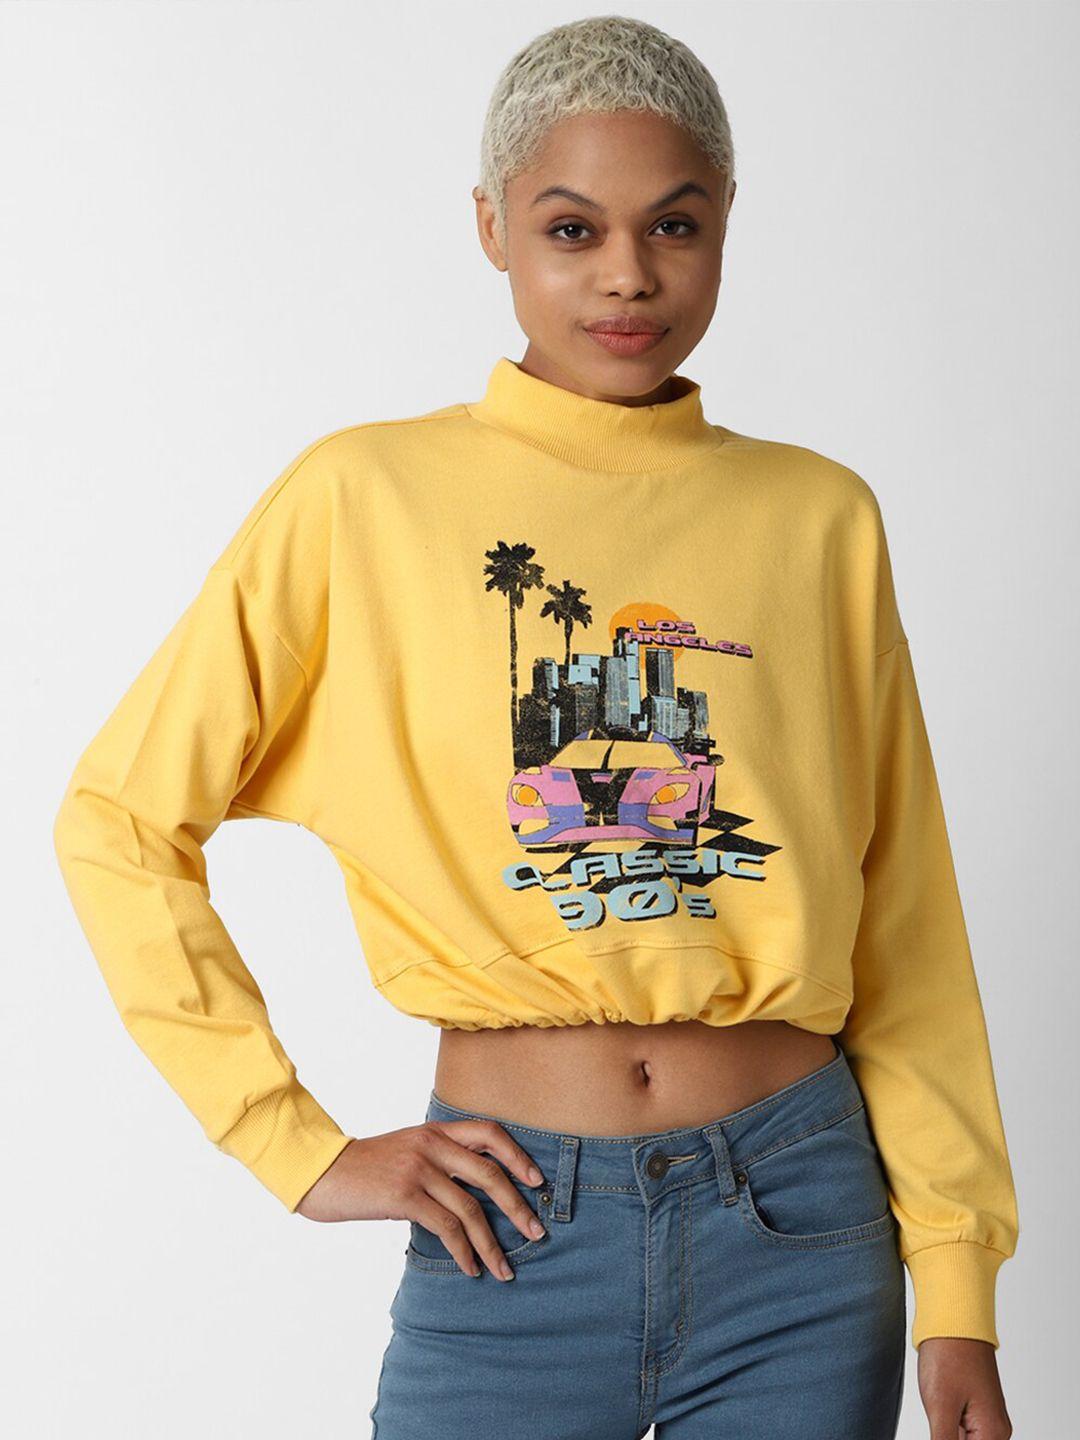 forever-21-women-yellow-graphic-printed-cotton-sweatshirt